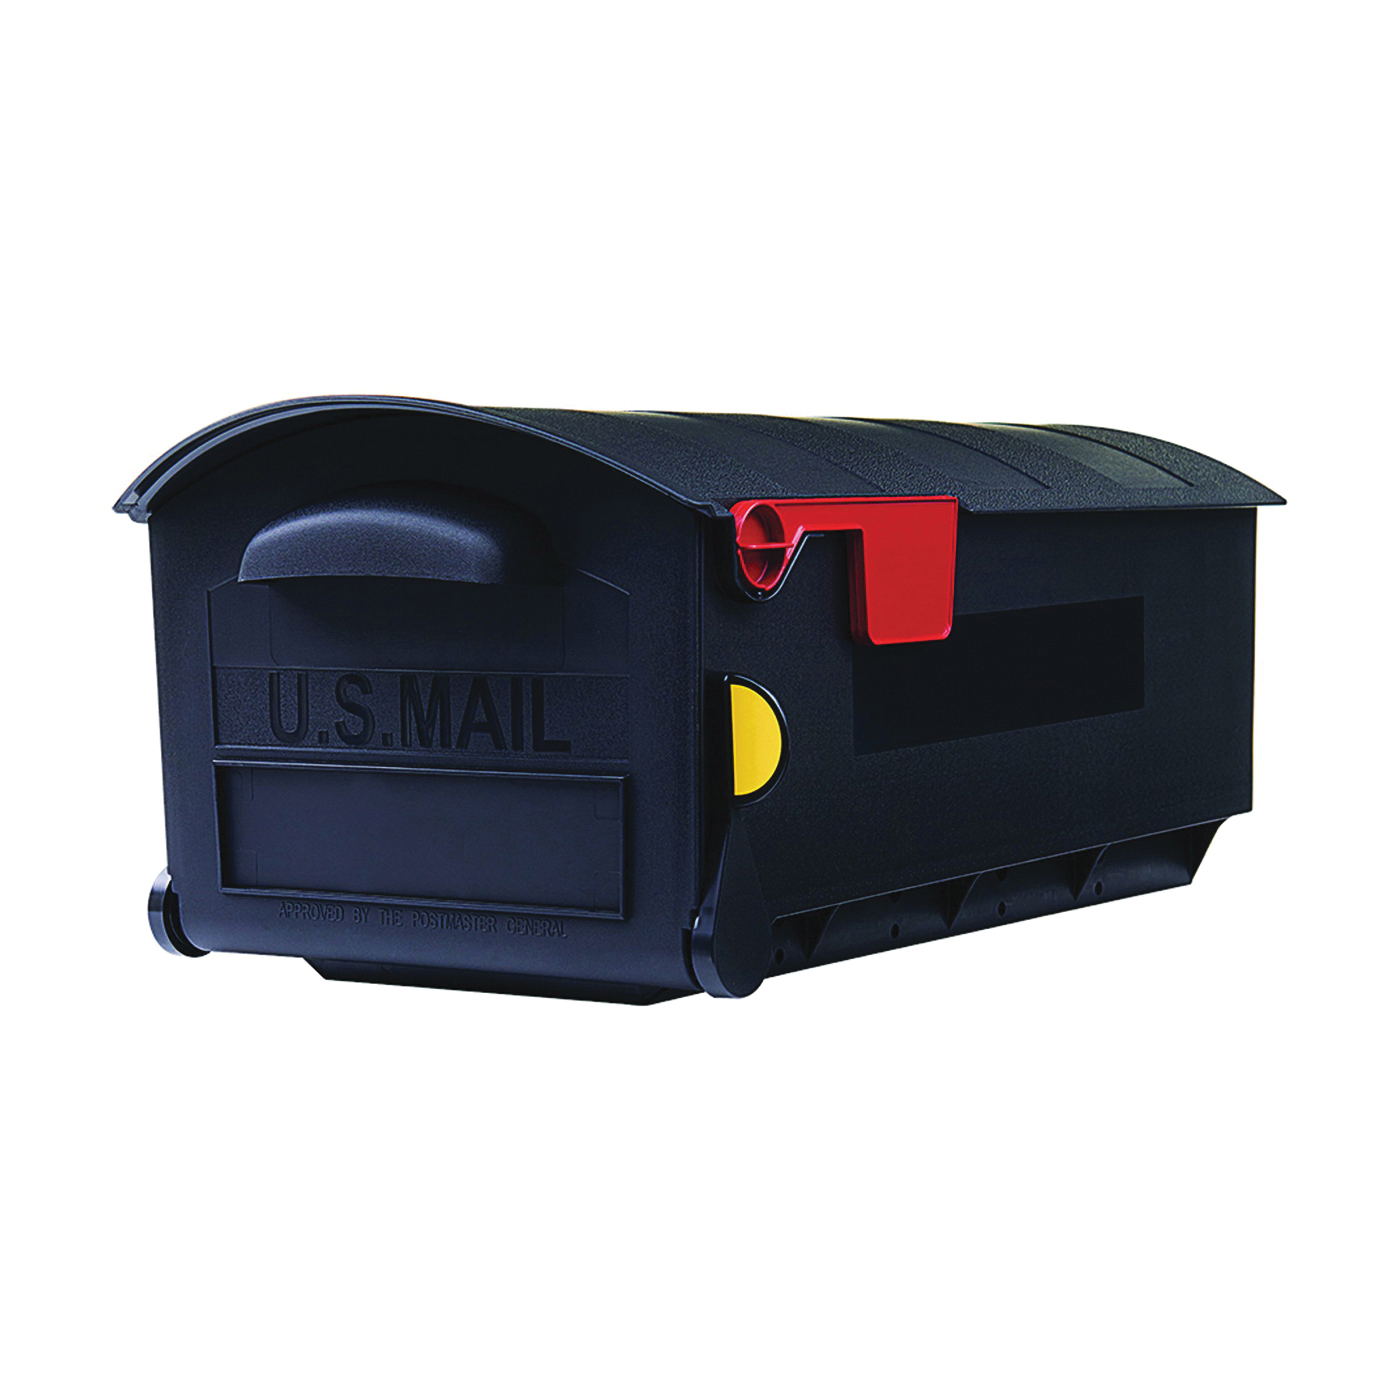 Patriot Series GMB515B01 Rural Mailbox, 1200 cu-in Capacity, Plastic, 12.4 in W, 21.3 in D, Black